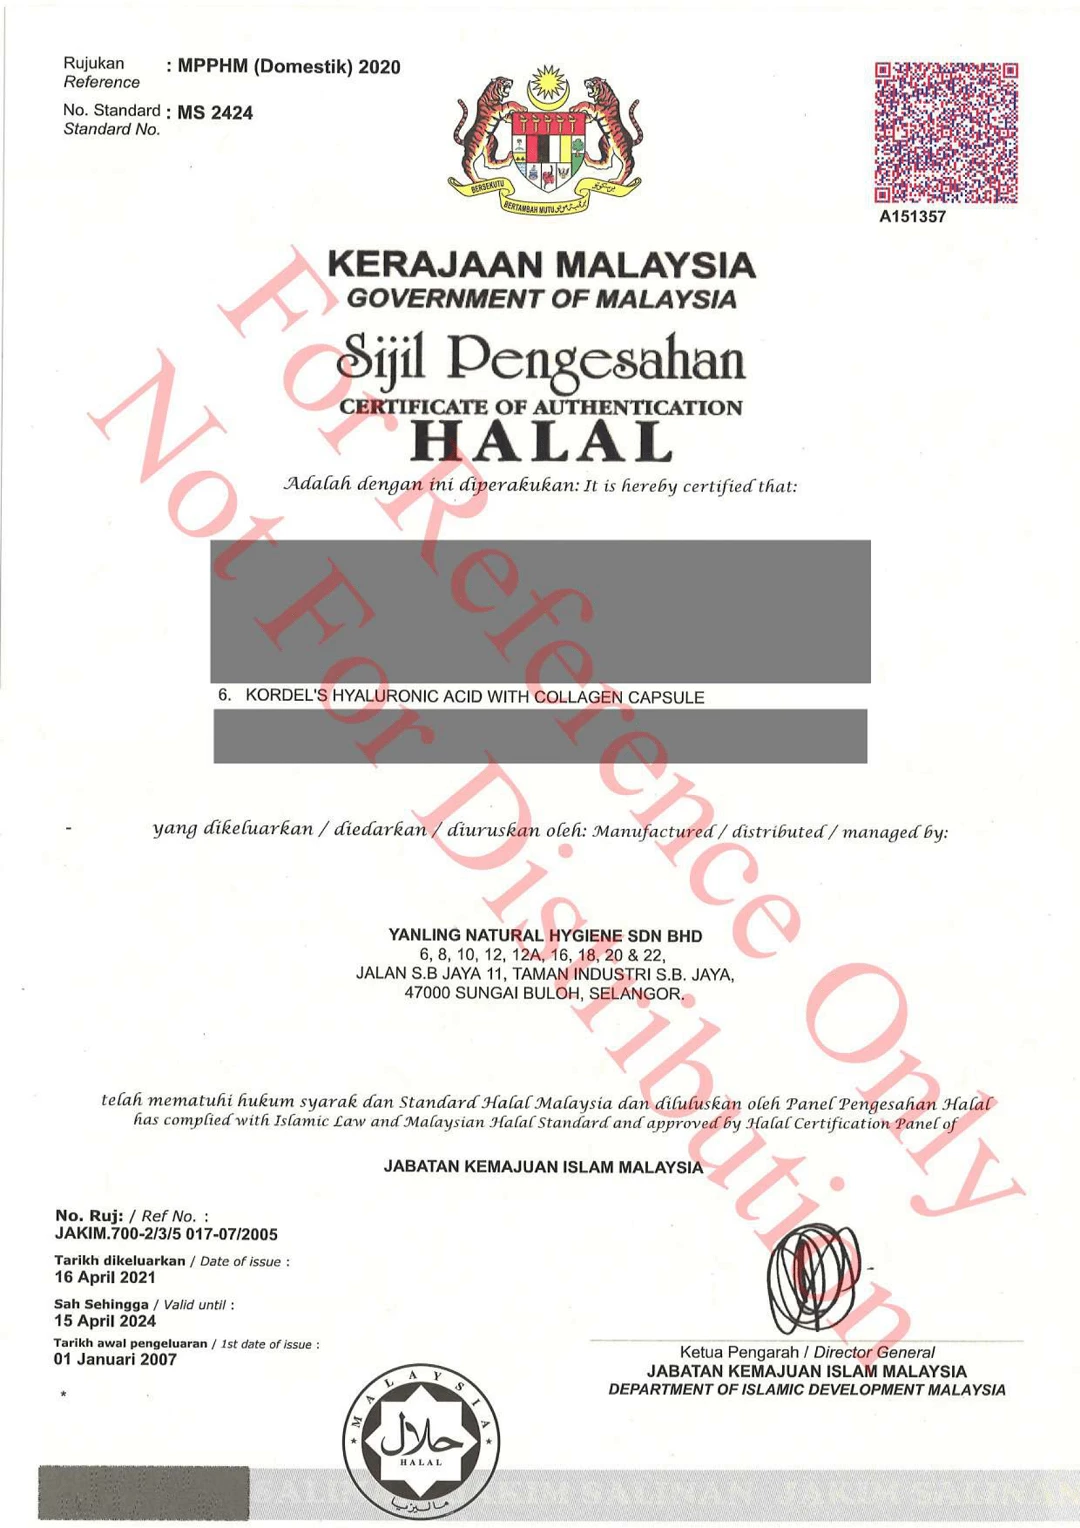 Halal Certification For Kordel's Hyaluronic Acid With Collagen